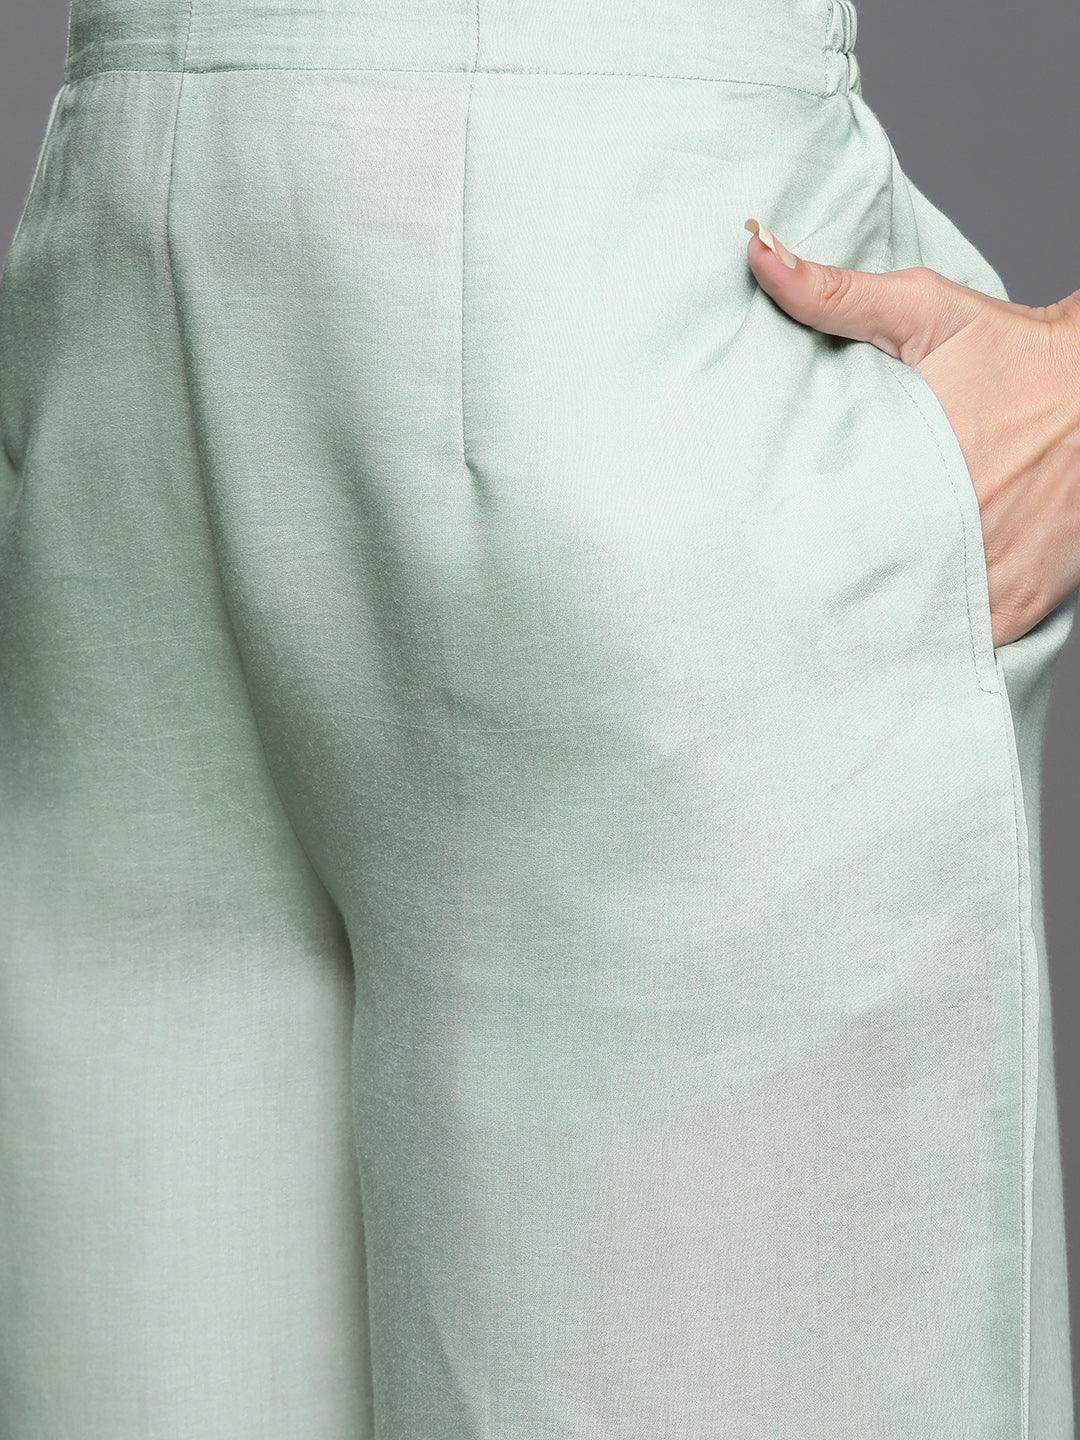 Grey Self Design Chanderi Silk Straight Suit Set - Libas